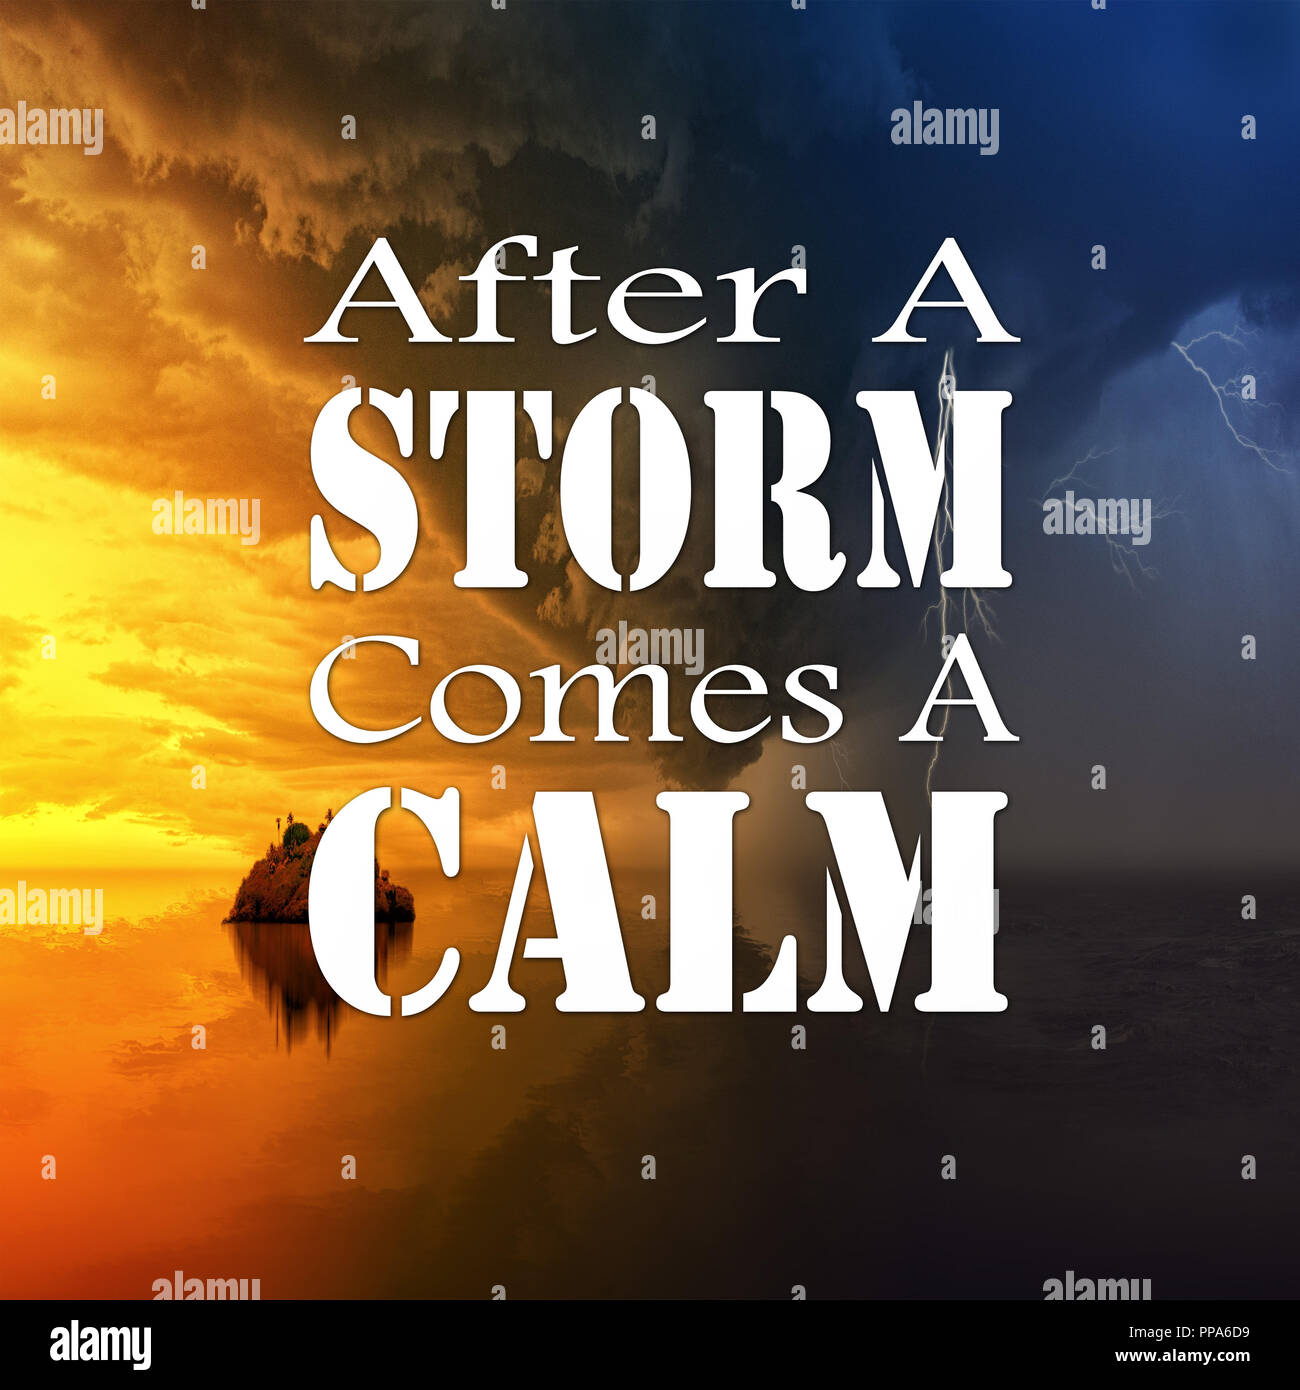 After a storm comes a calm